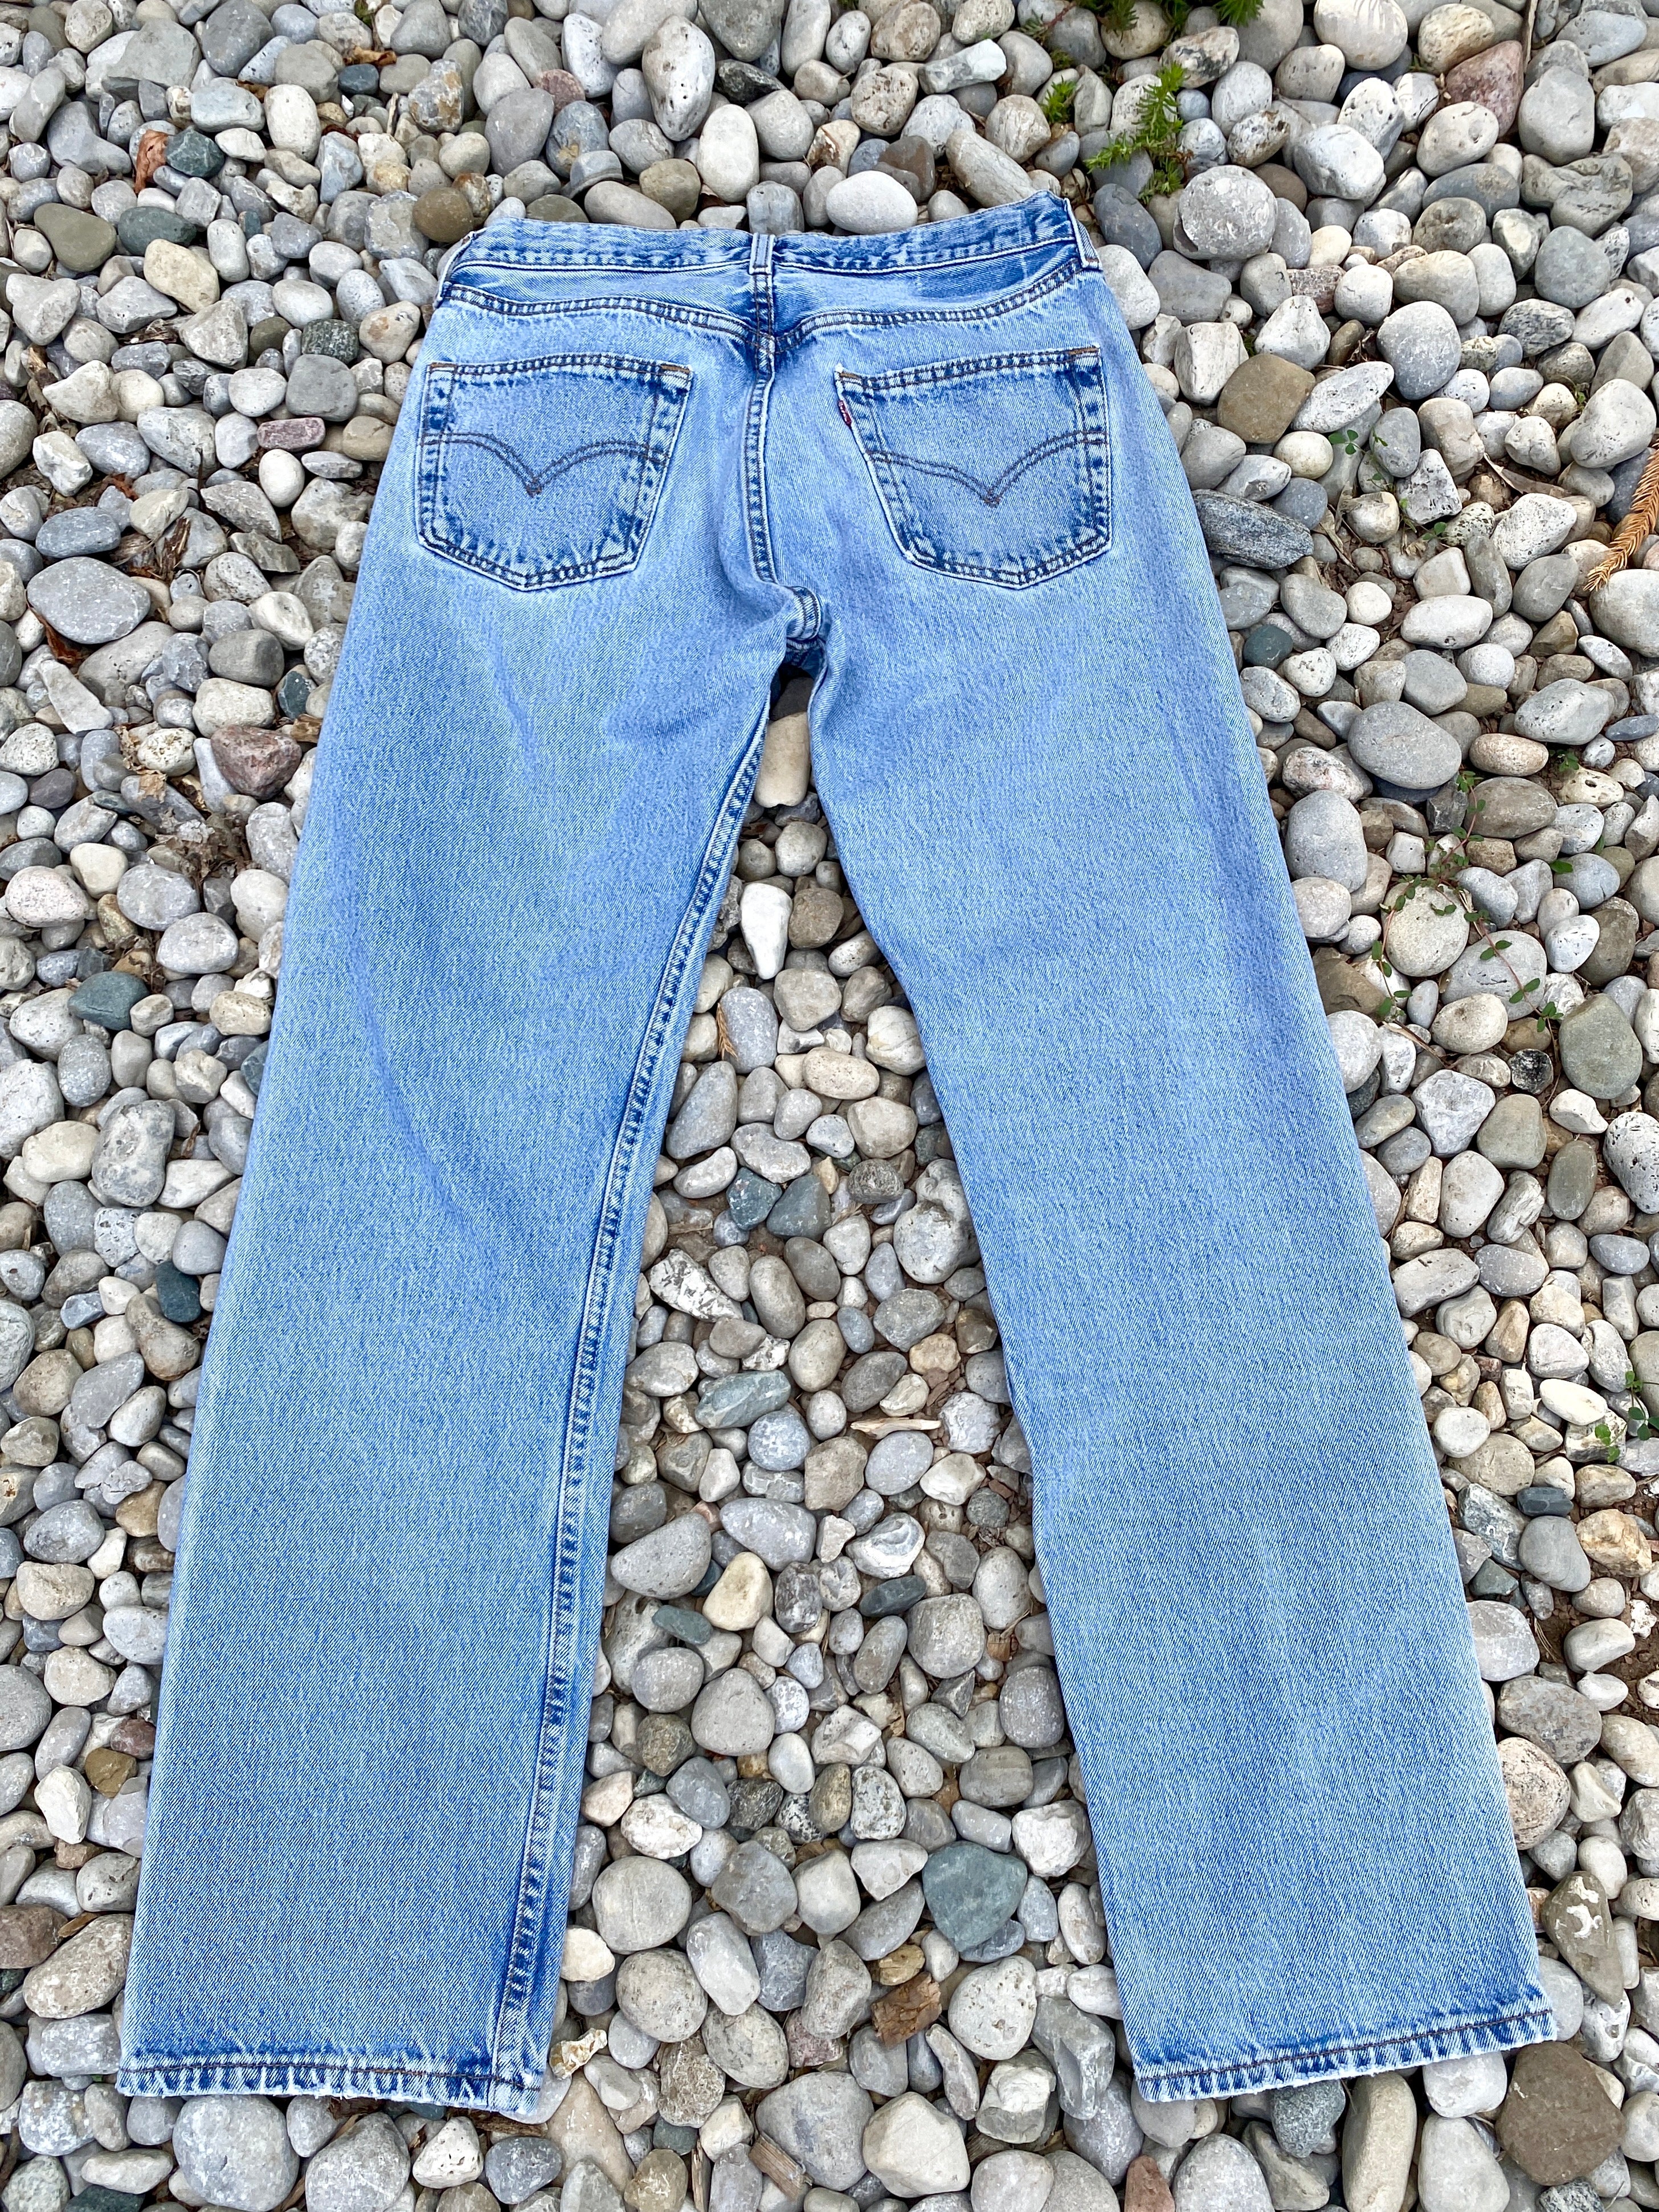 Vintage Levis 501 Light Blue Wash Jeans size 30/31 USA